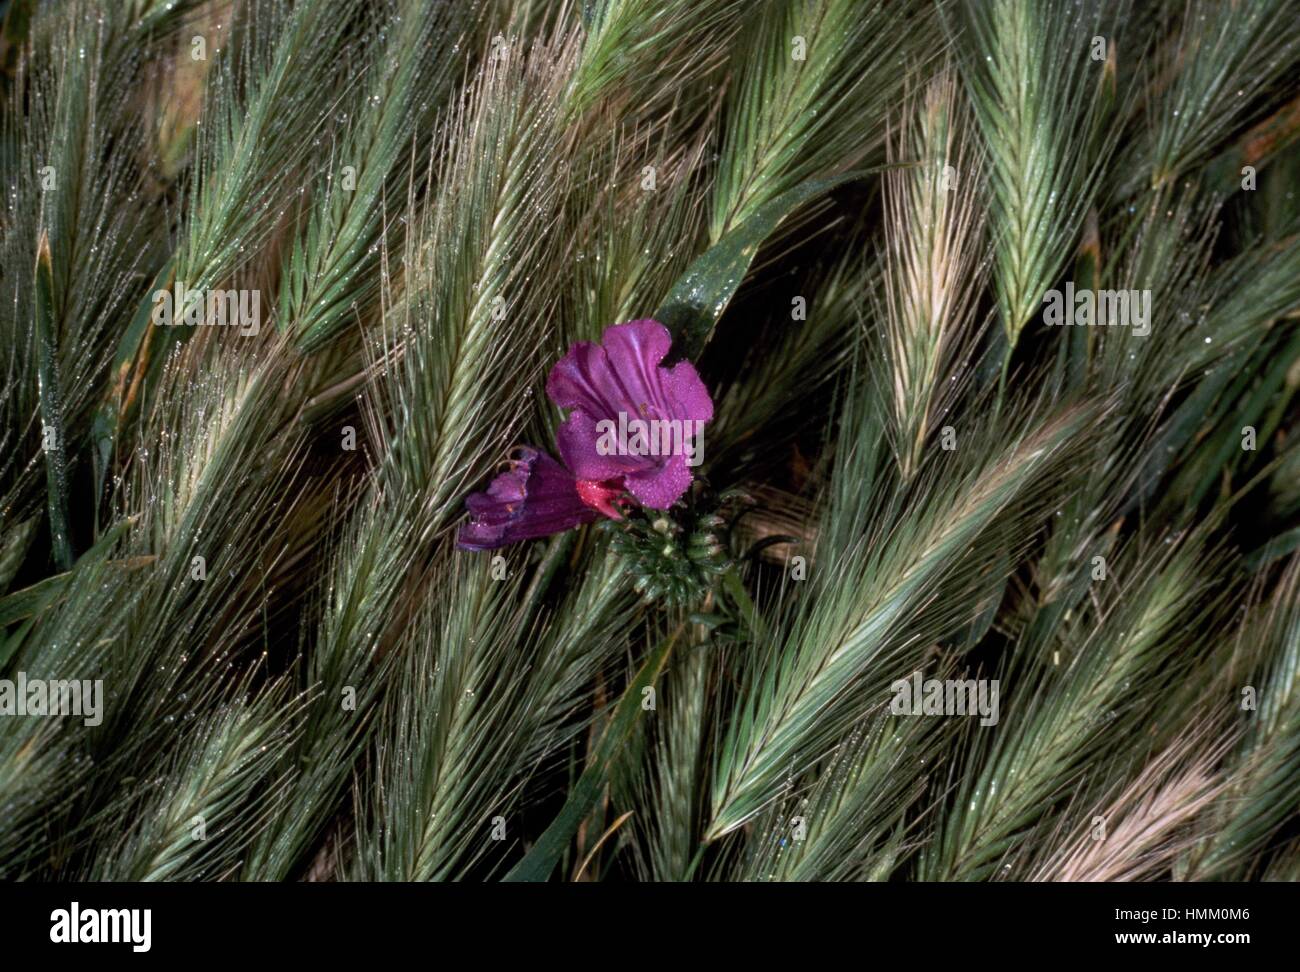 Wheat ears with Salvation jane flower (Echium plantagineum), Boraginaceae. Stock Photo